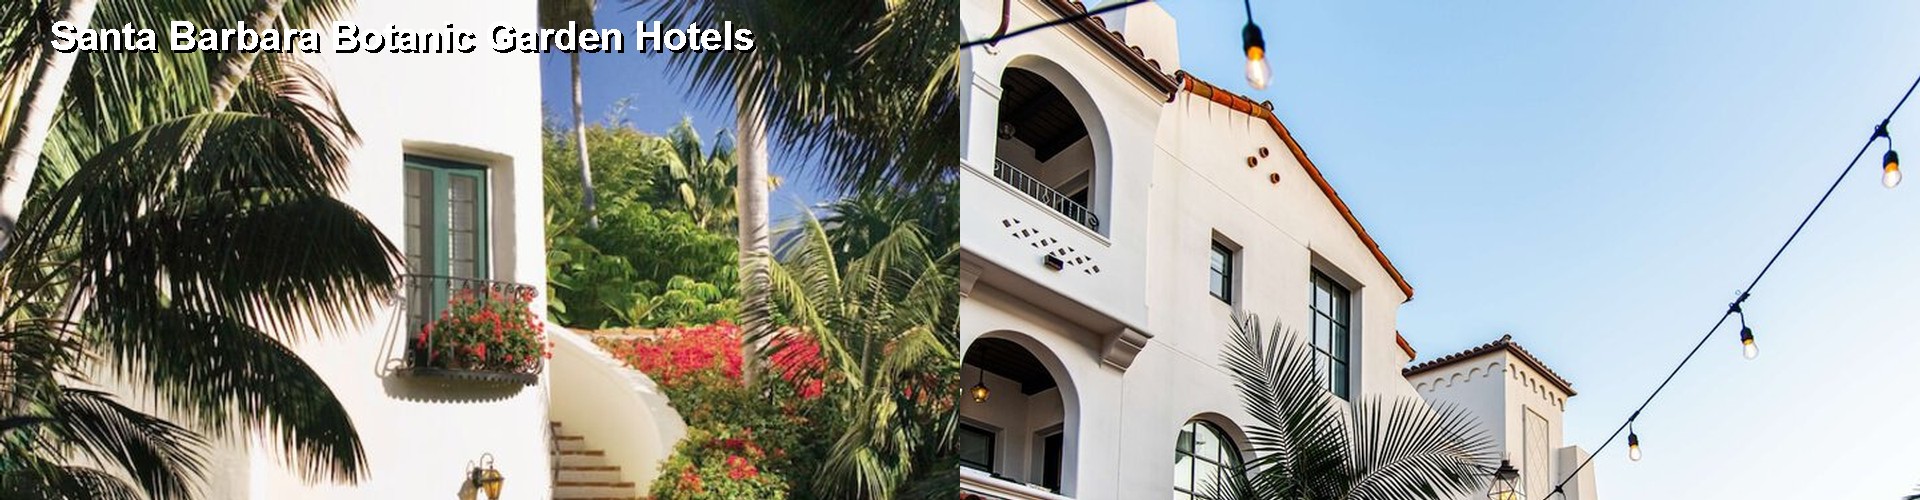 4 Best Hotels near Santa Barbara Botanic Garden